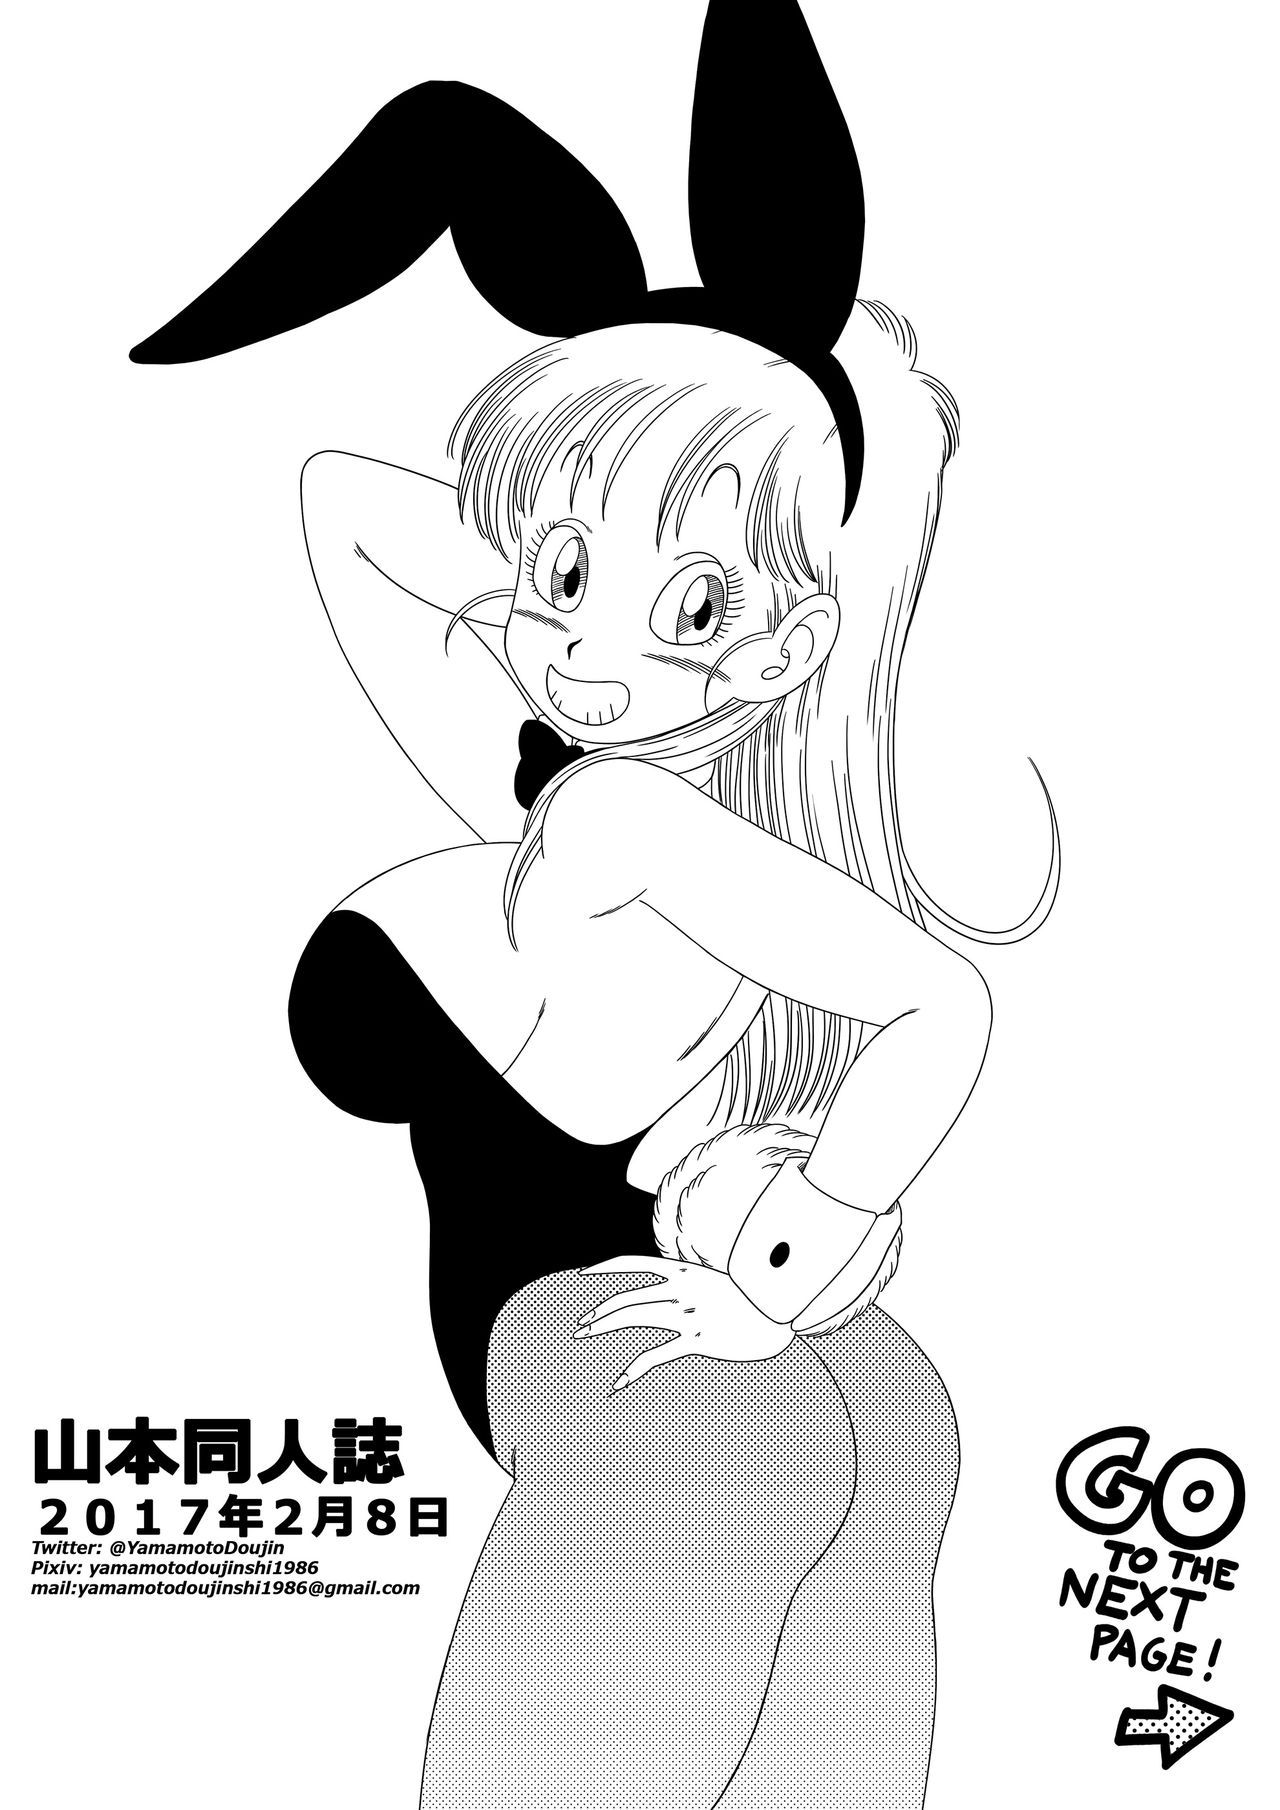 Bunny Girl Transformation - 17d06fdf96bdcd91c9259aba9d560033